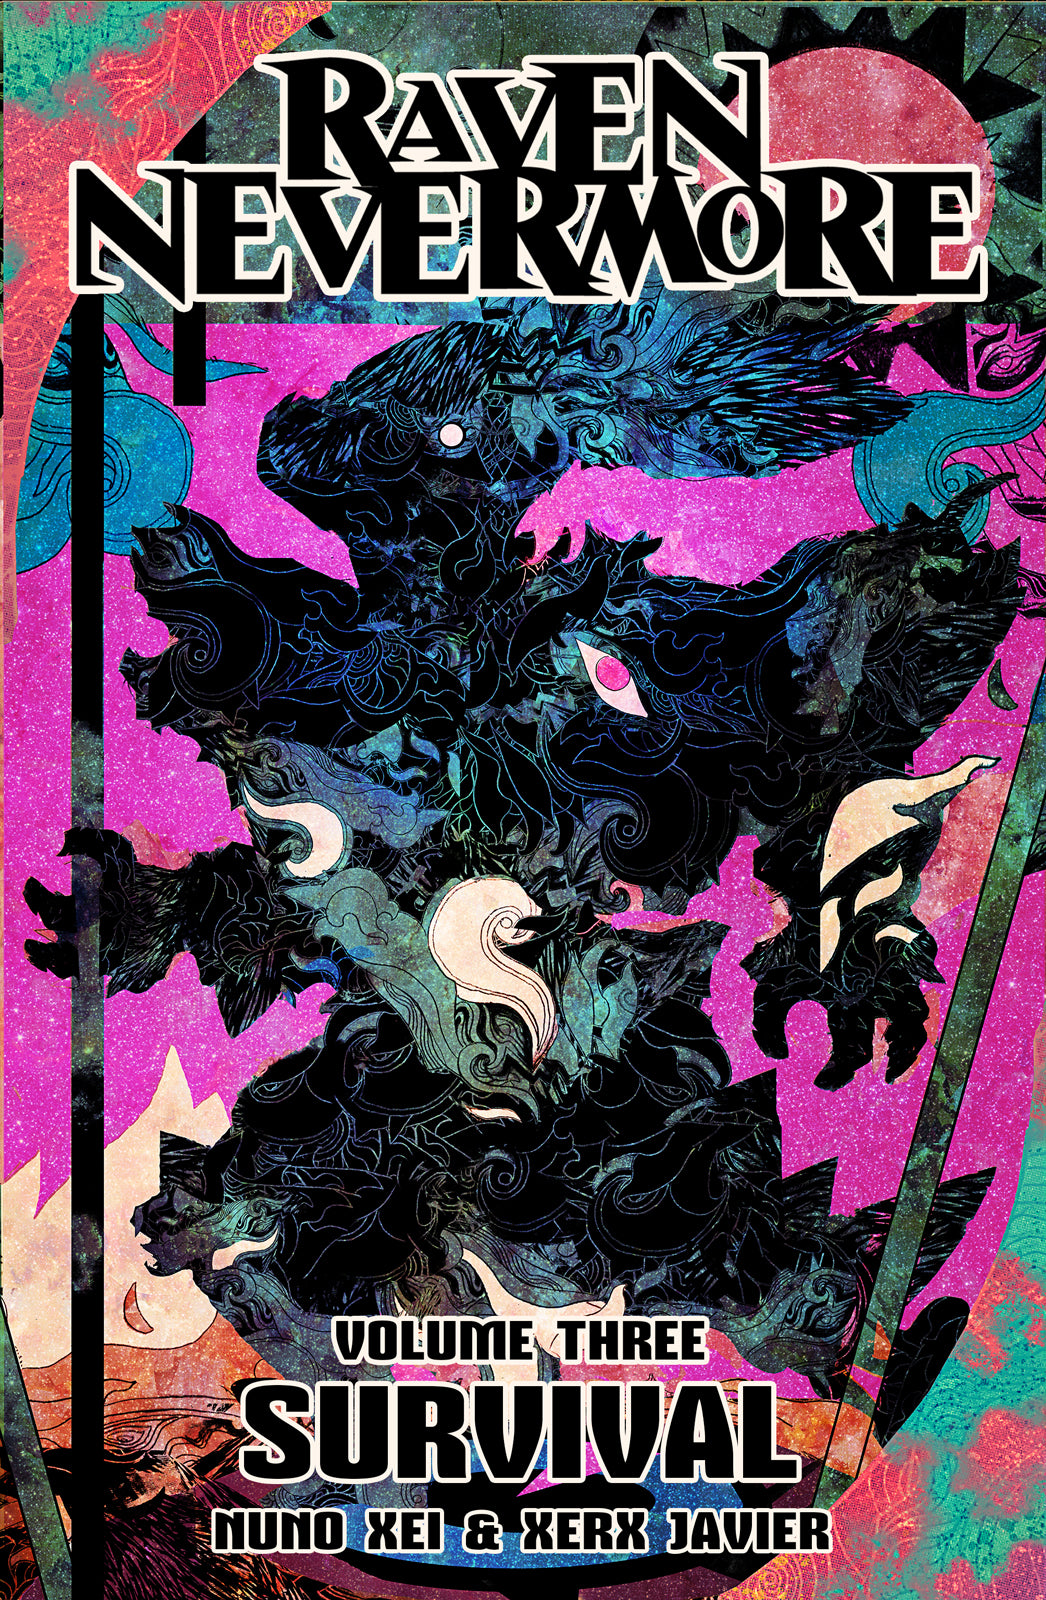 Raven Nevermore, Volume 3: Survival